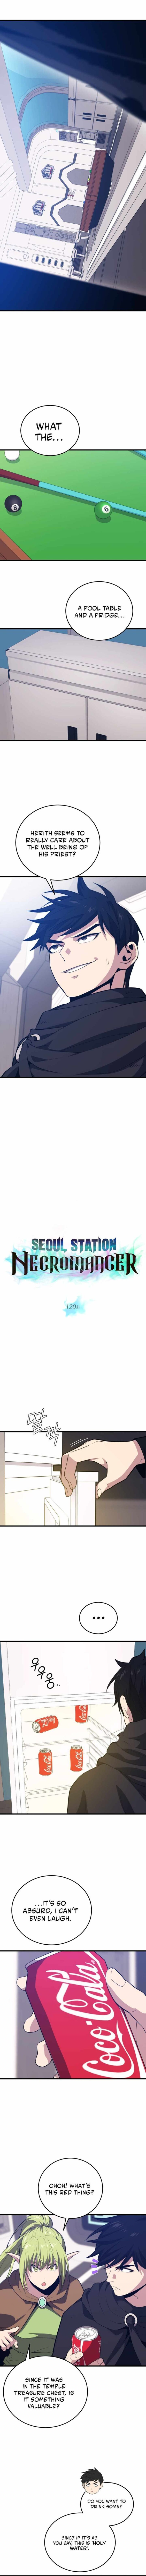 seoul_stations_necromancer_120_3